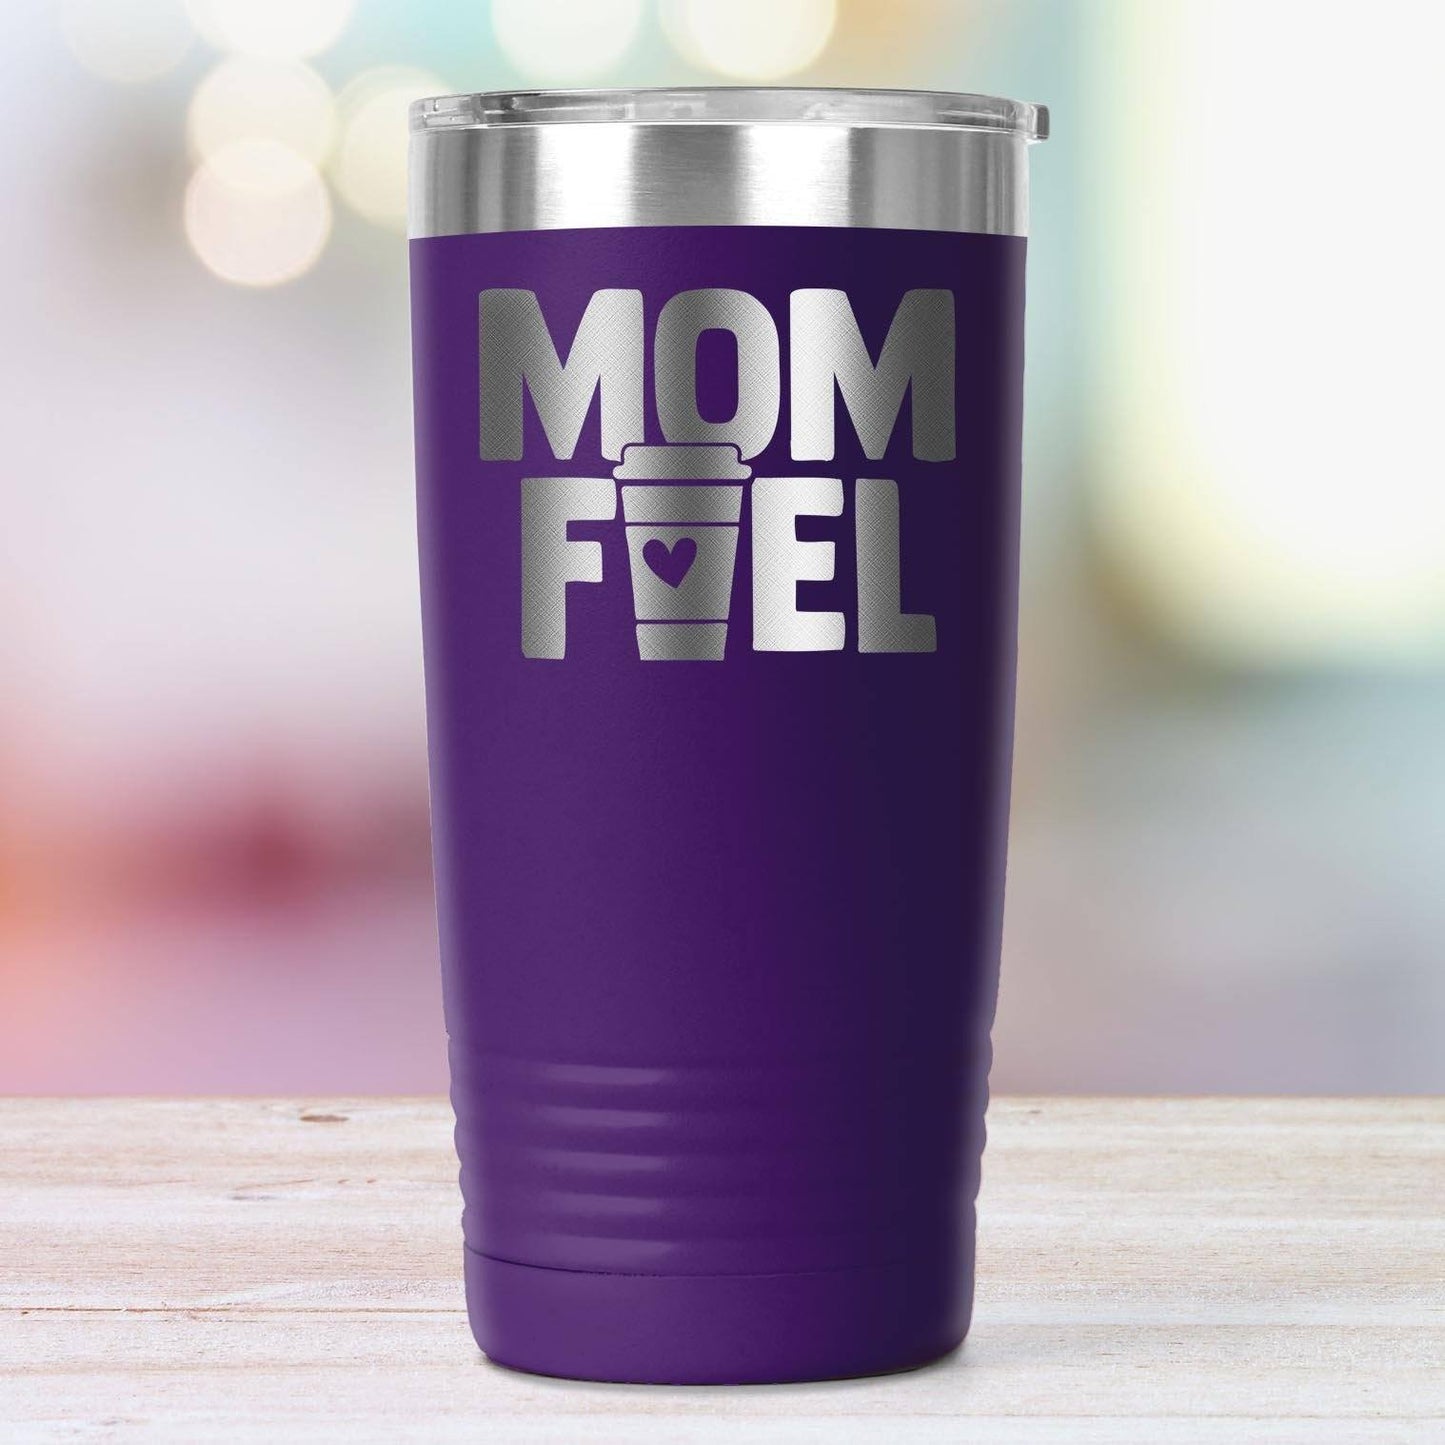 Mom Fuel Bold 20oz. Insulated Coffee Tumbler